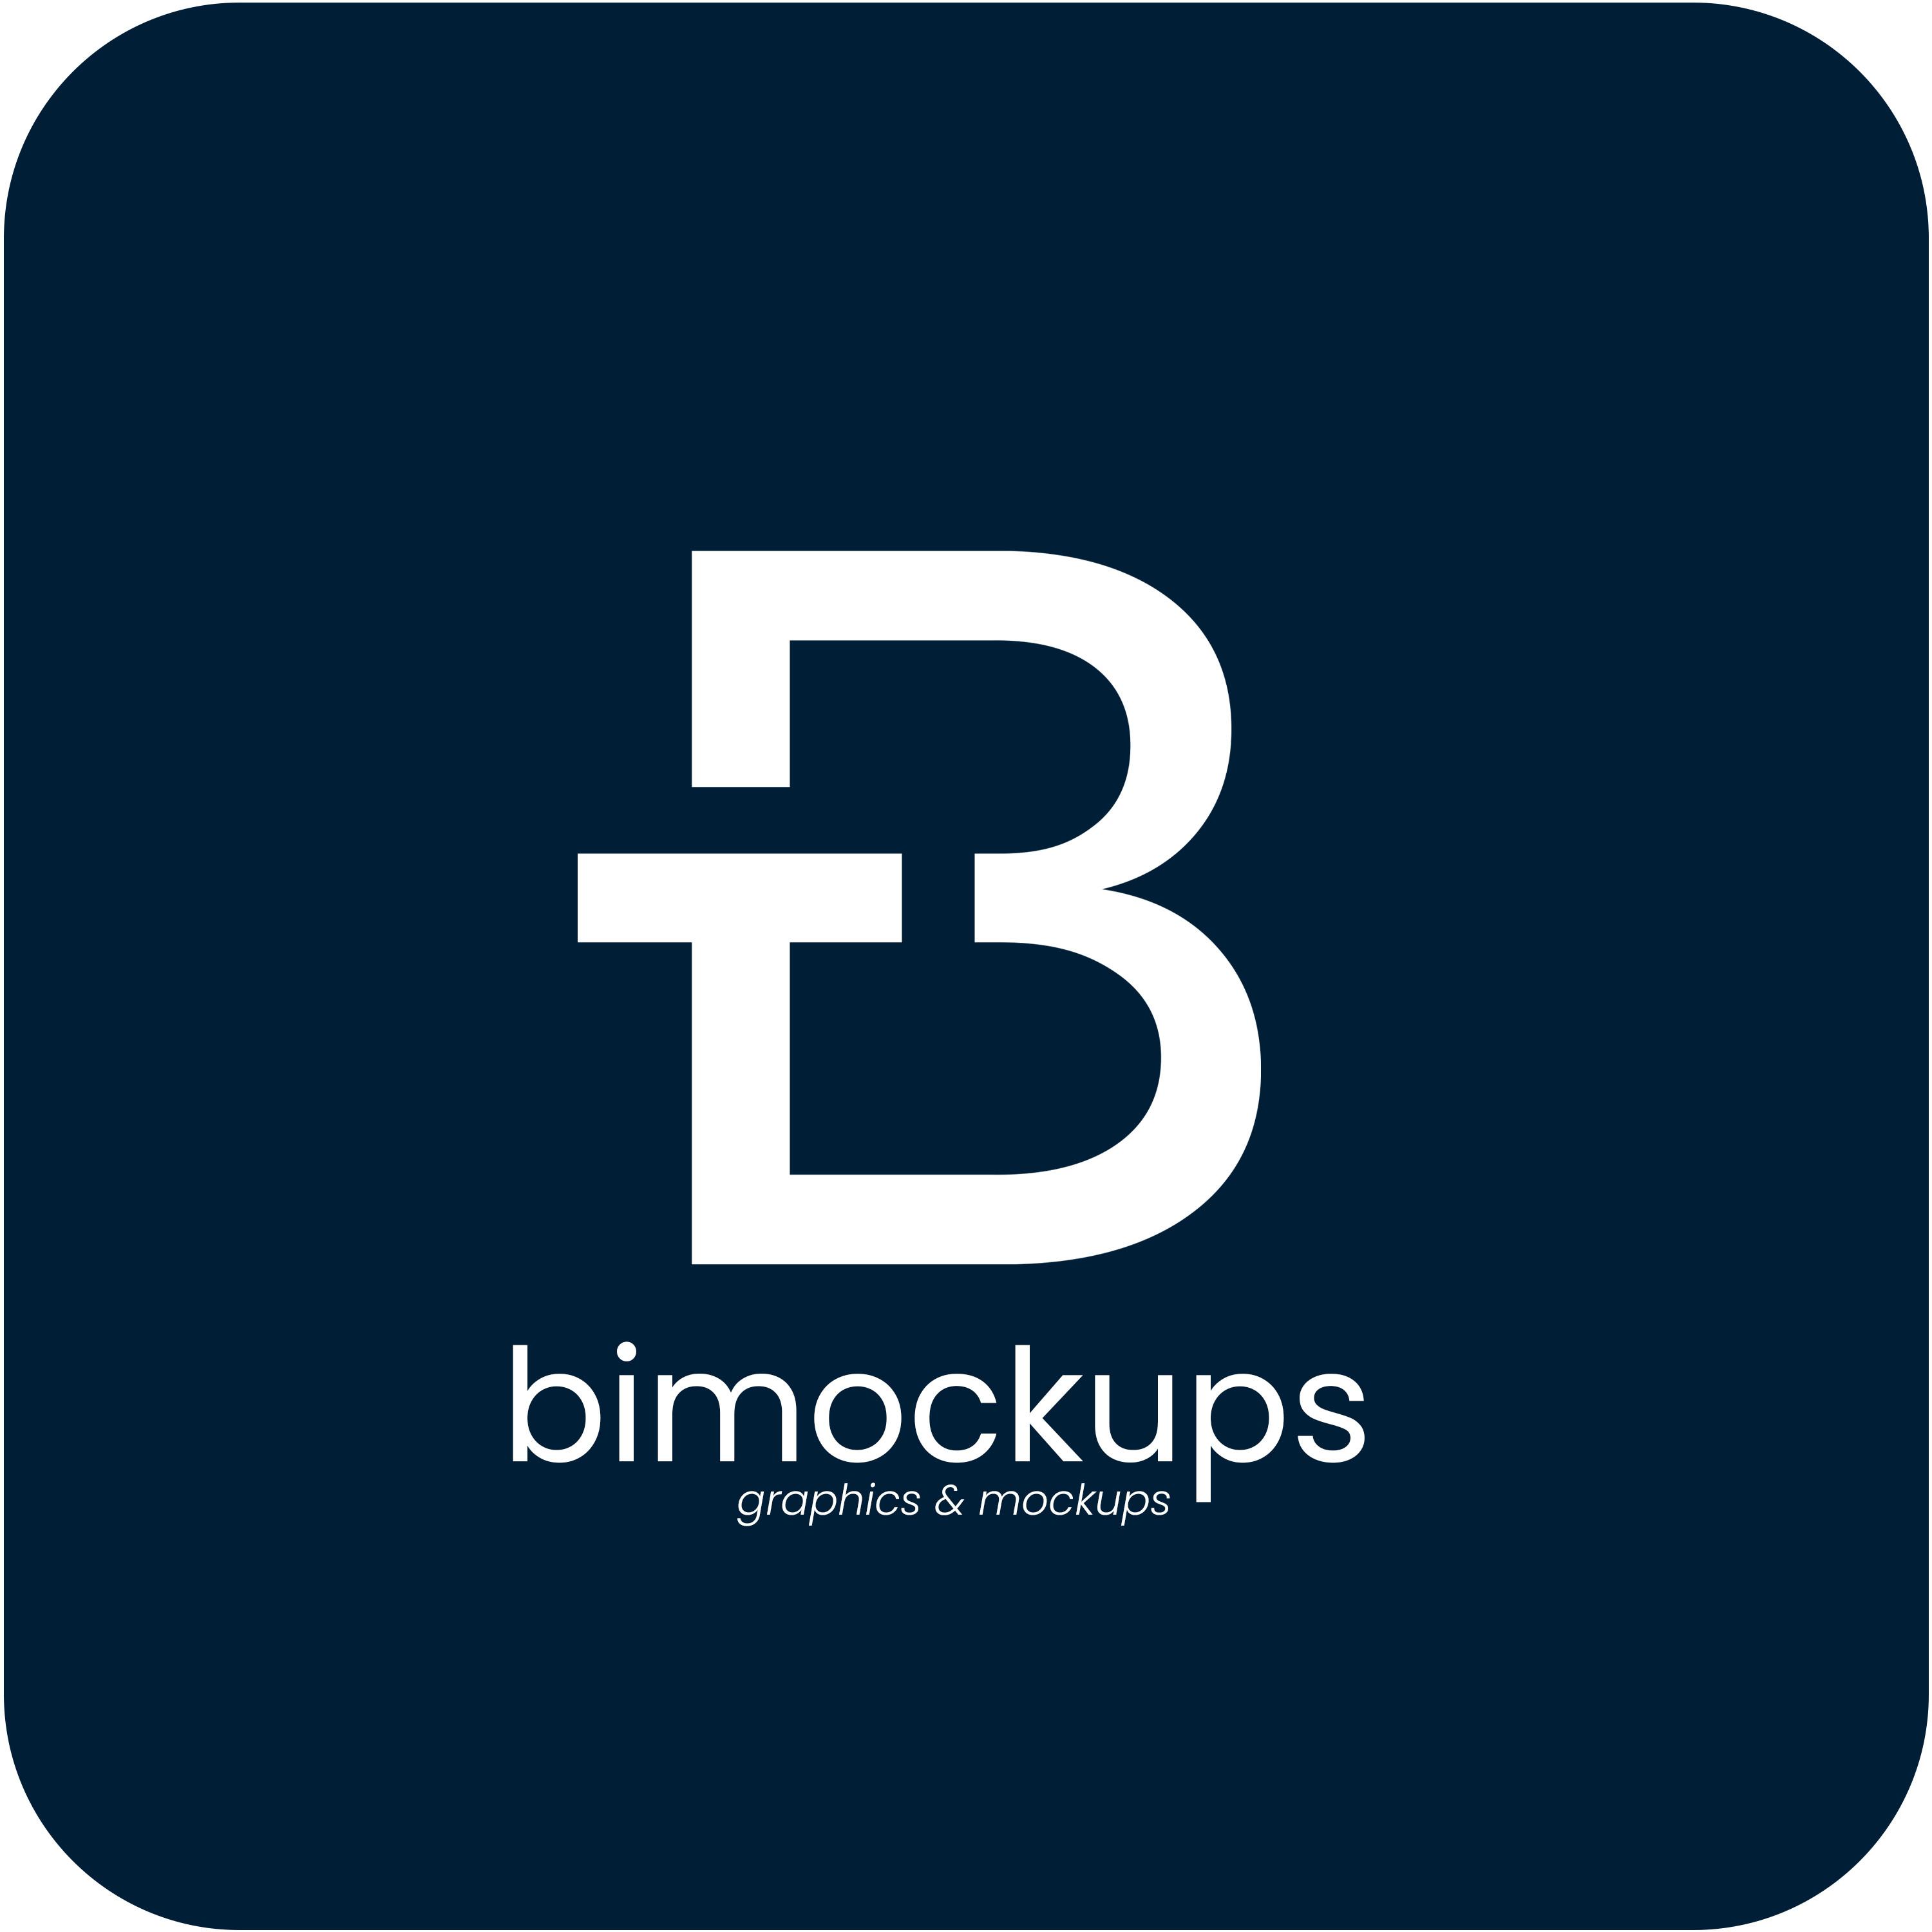 bimockups